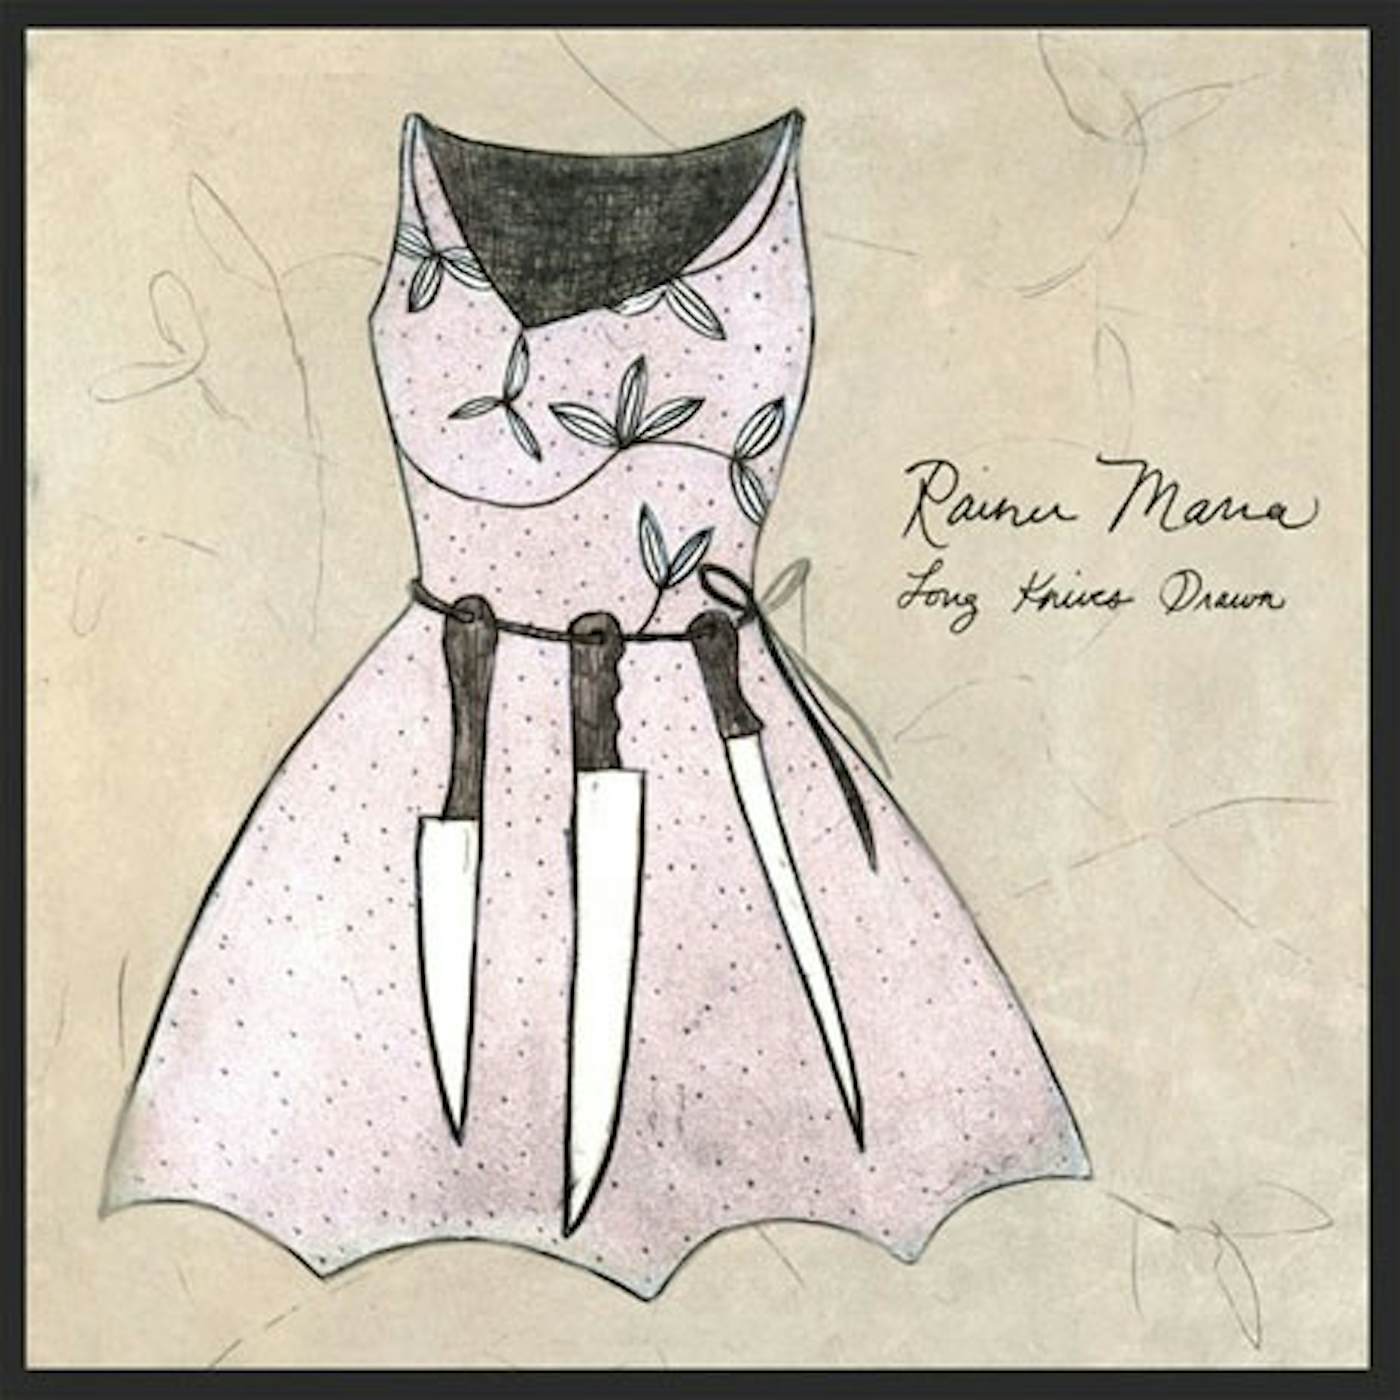 Rainer Maria Long Knives Drawn LP (Vinyl)